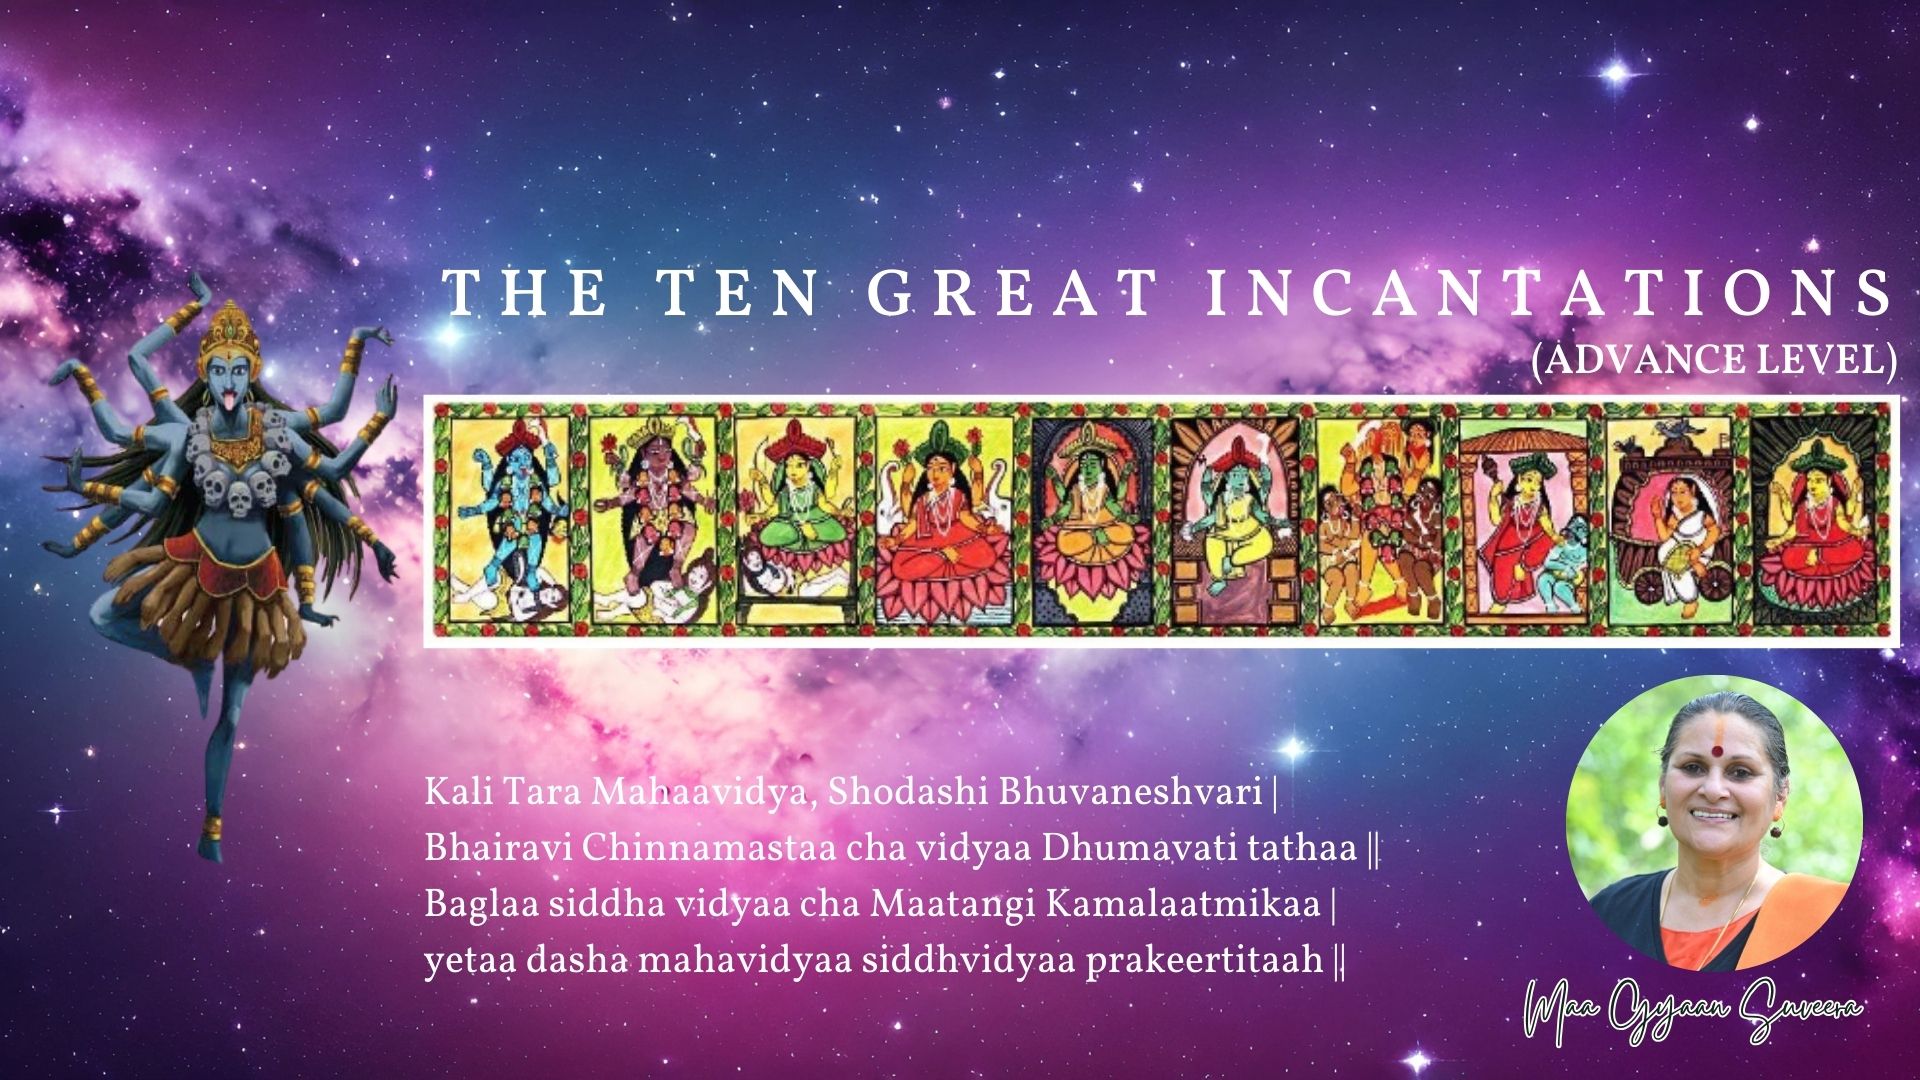 The Ten Great Incantations-Advance Level